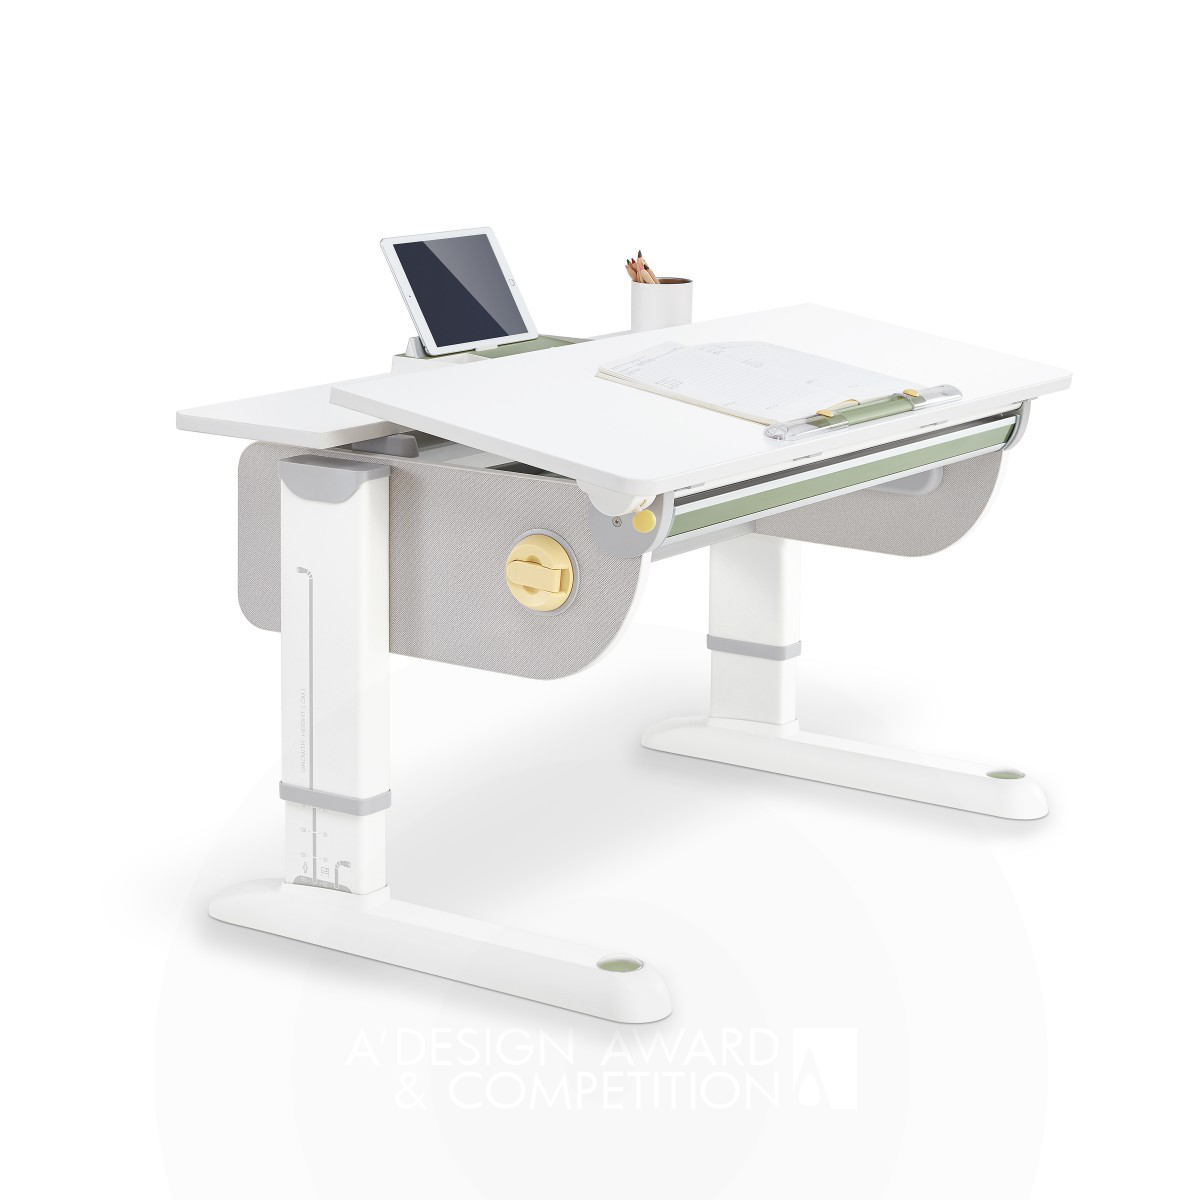 Venus Ergonomics Study Desk by Lei Wang Iron Furniture Design Award Winner 2021 